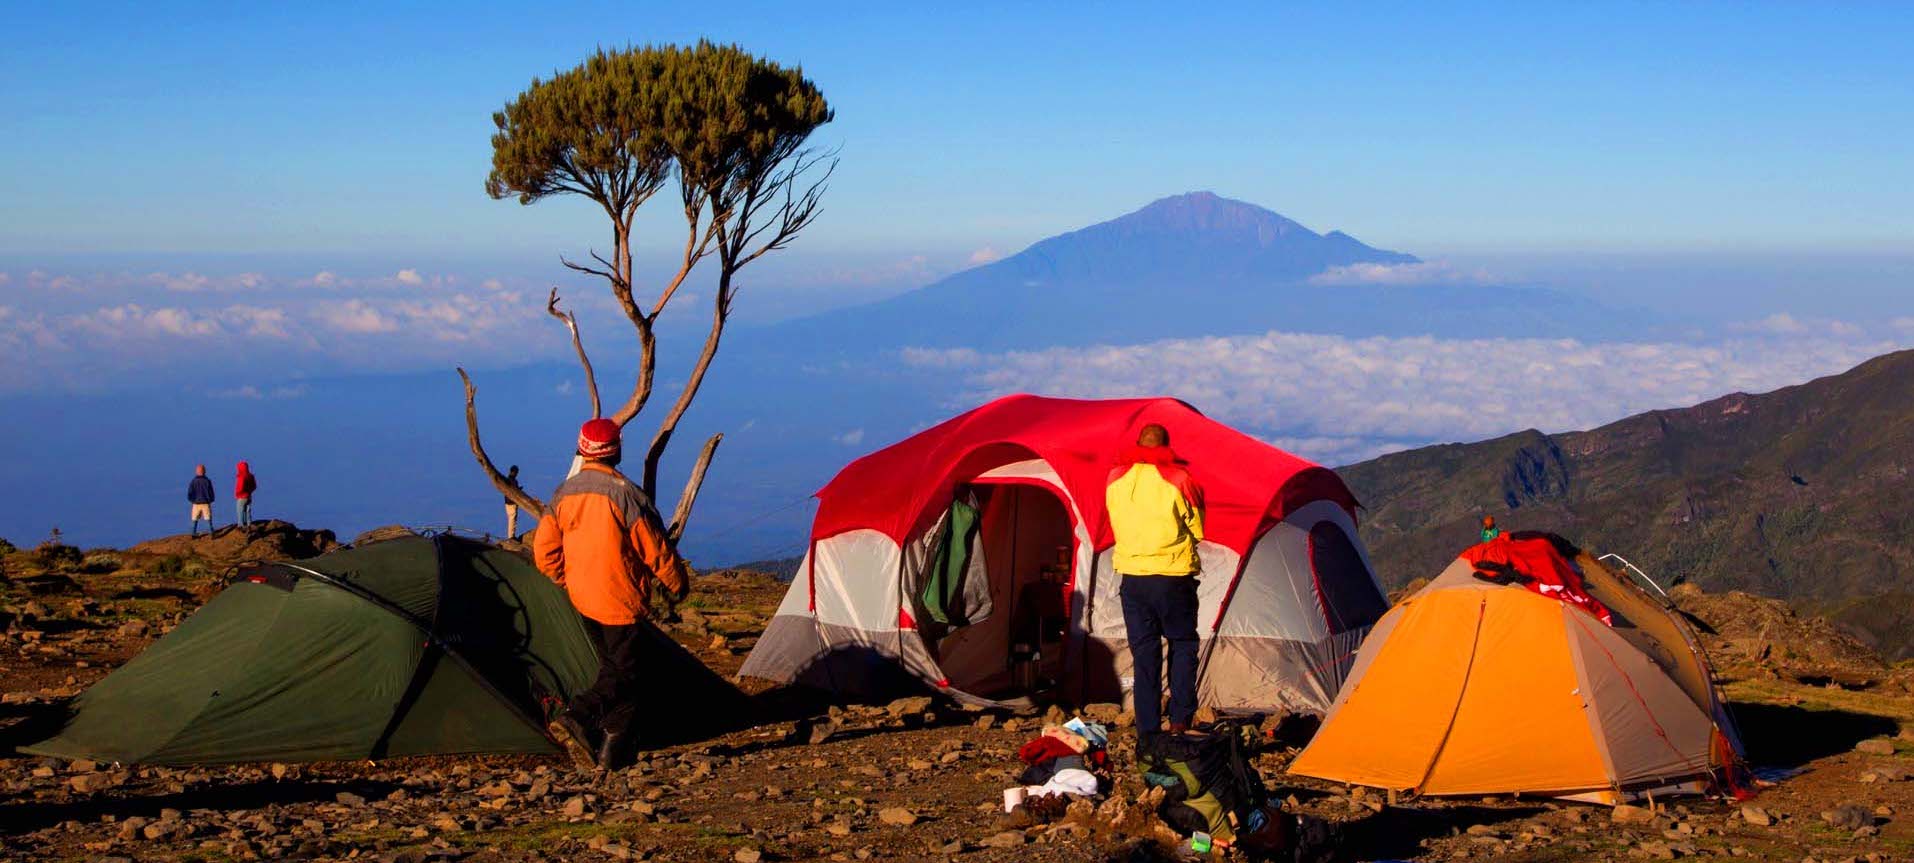 About Kilimanjaro Climbing | Kilimanjaro Climbing Company